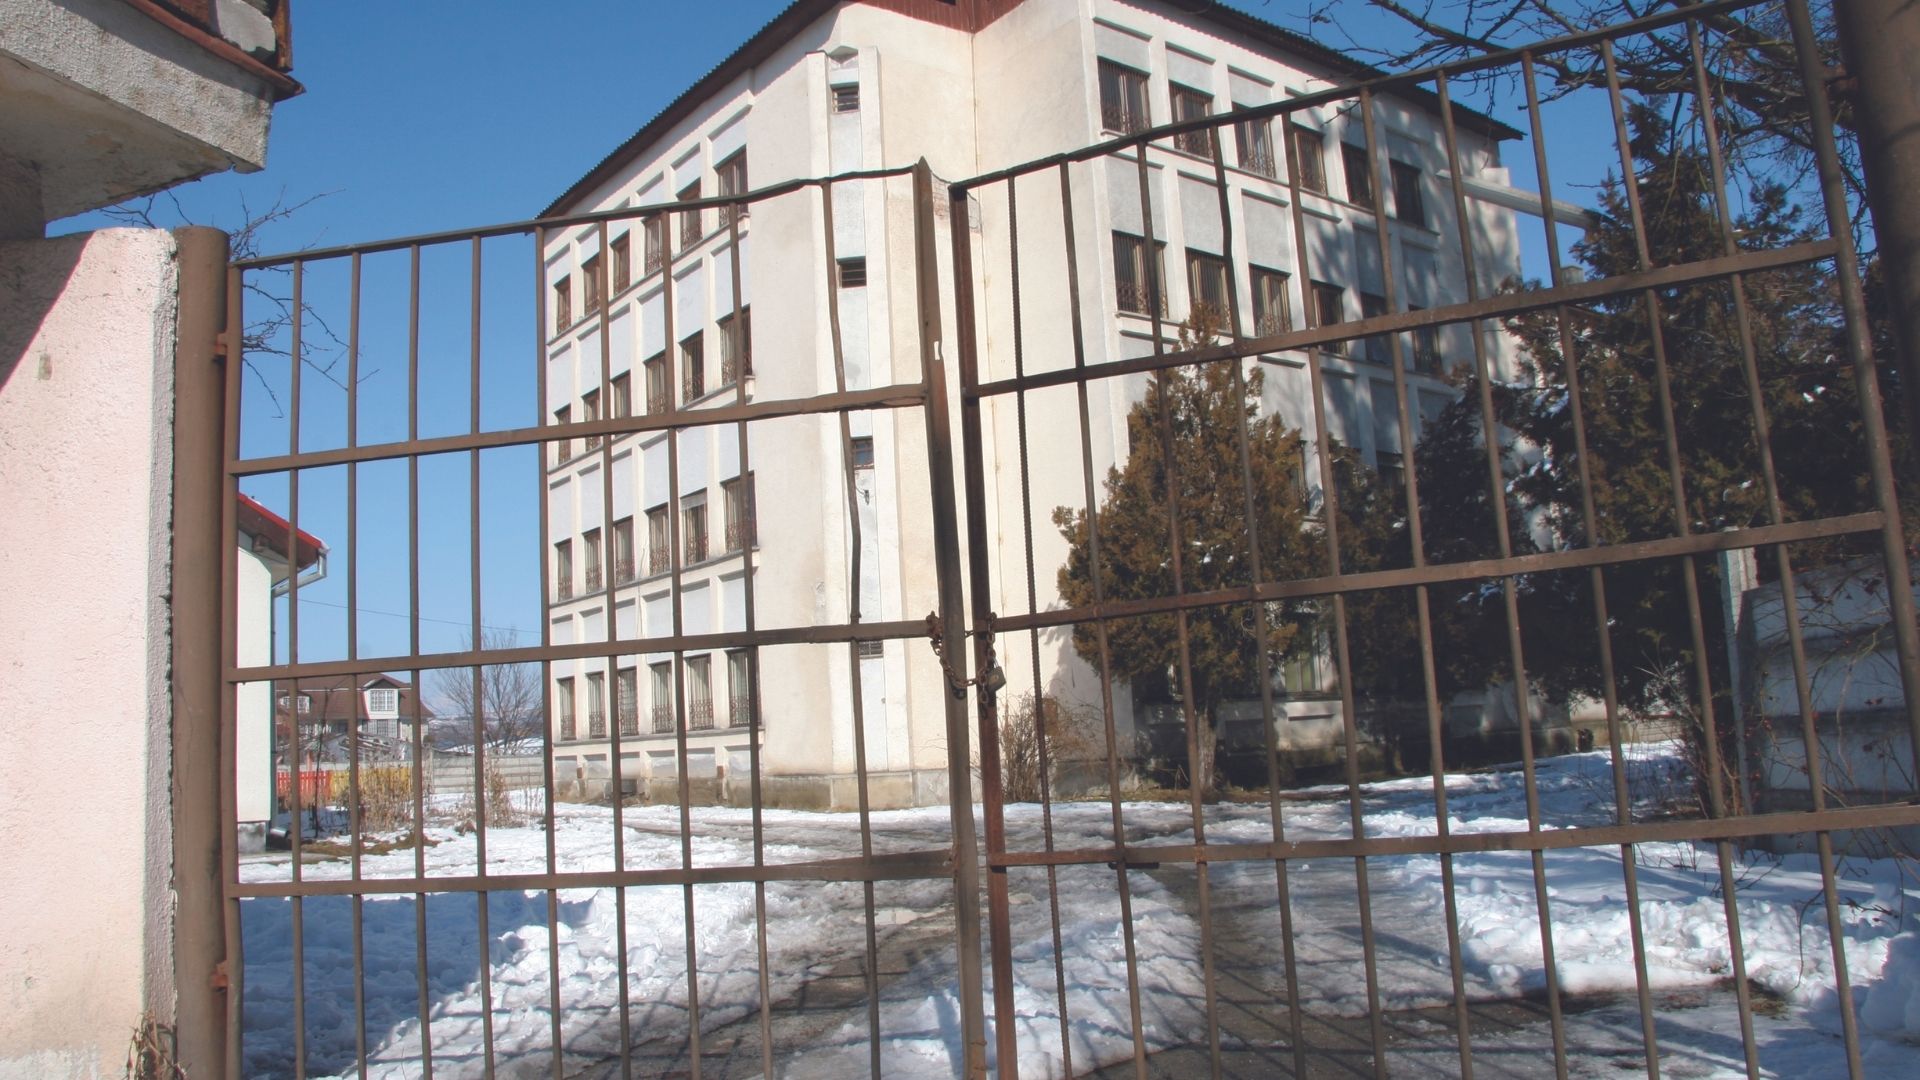 Camin Spital sighet Maramures, an orphanage in Romania like the one where David grew up